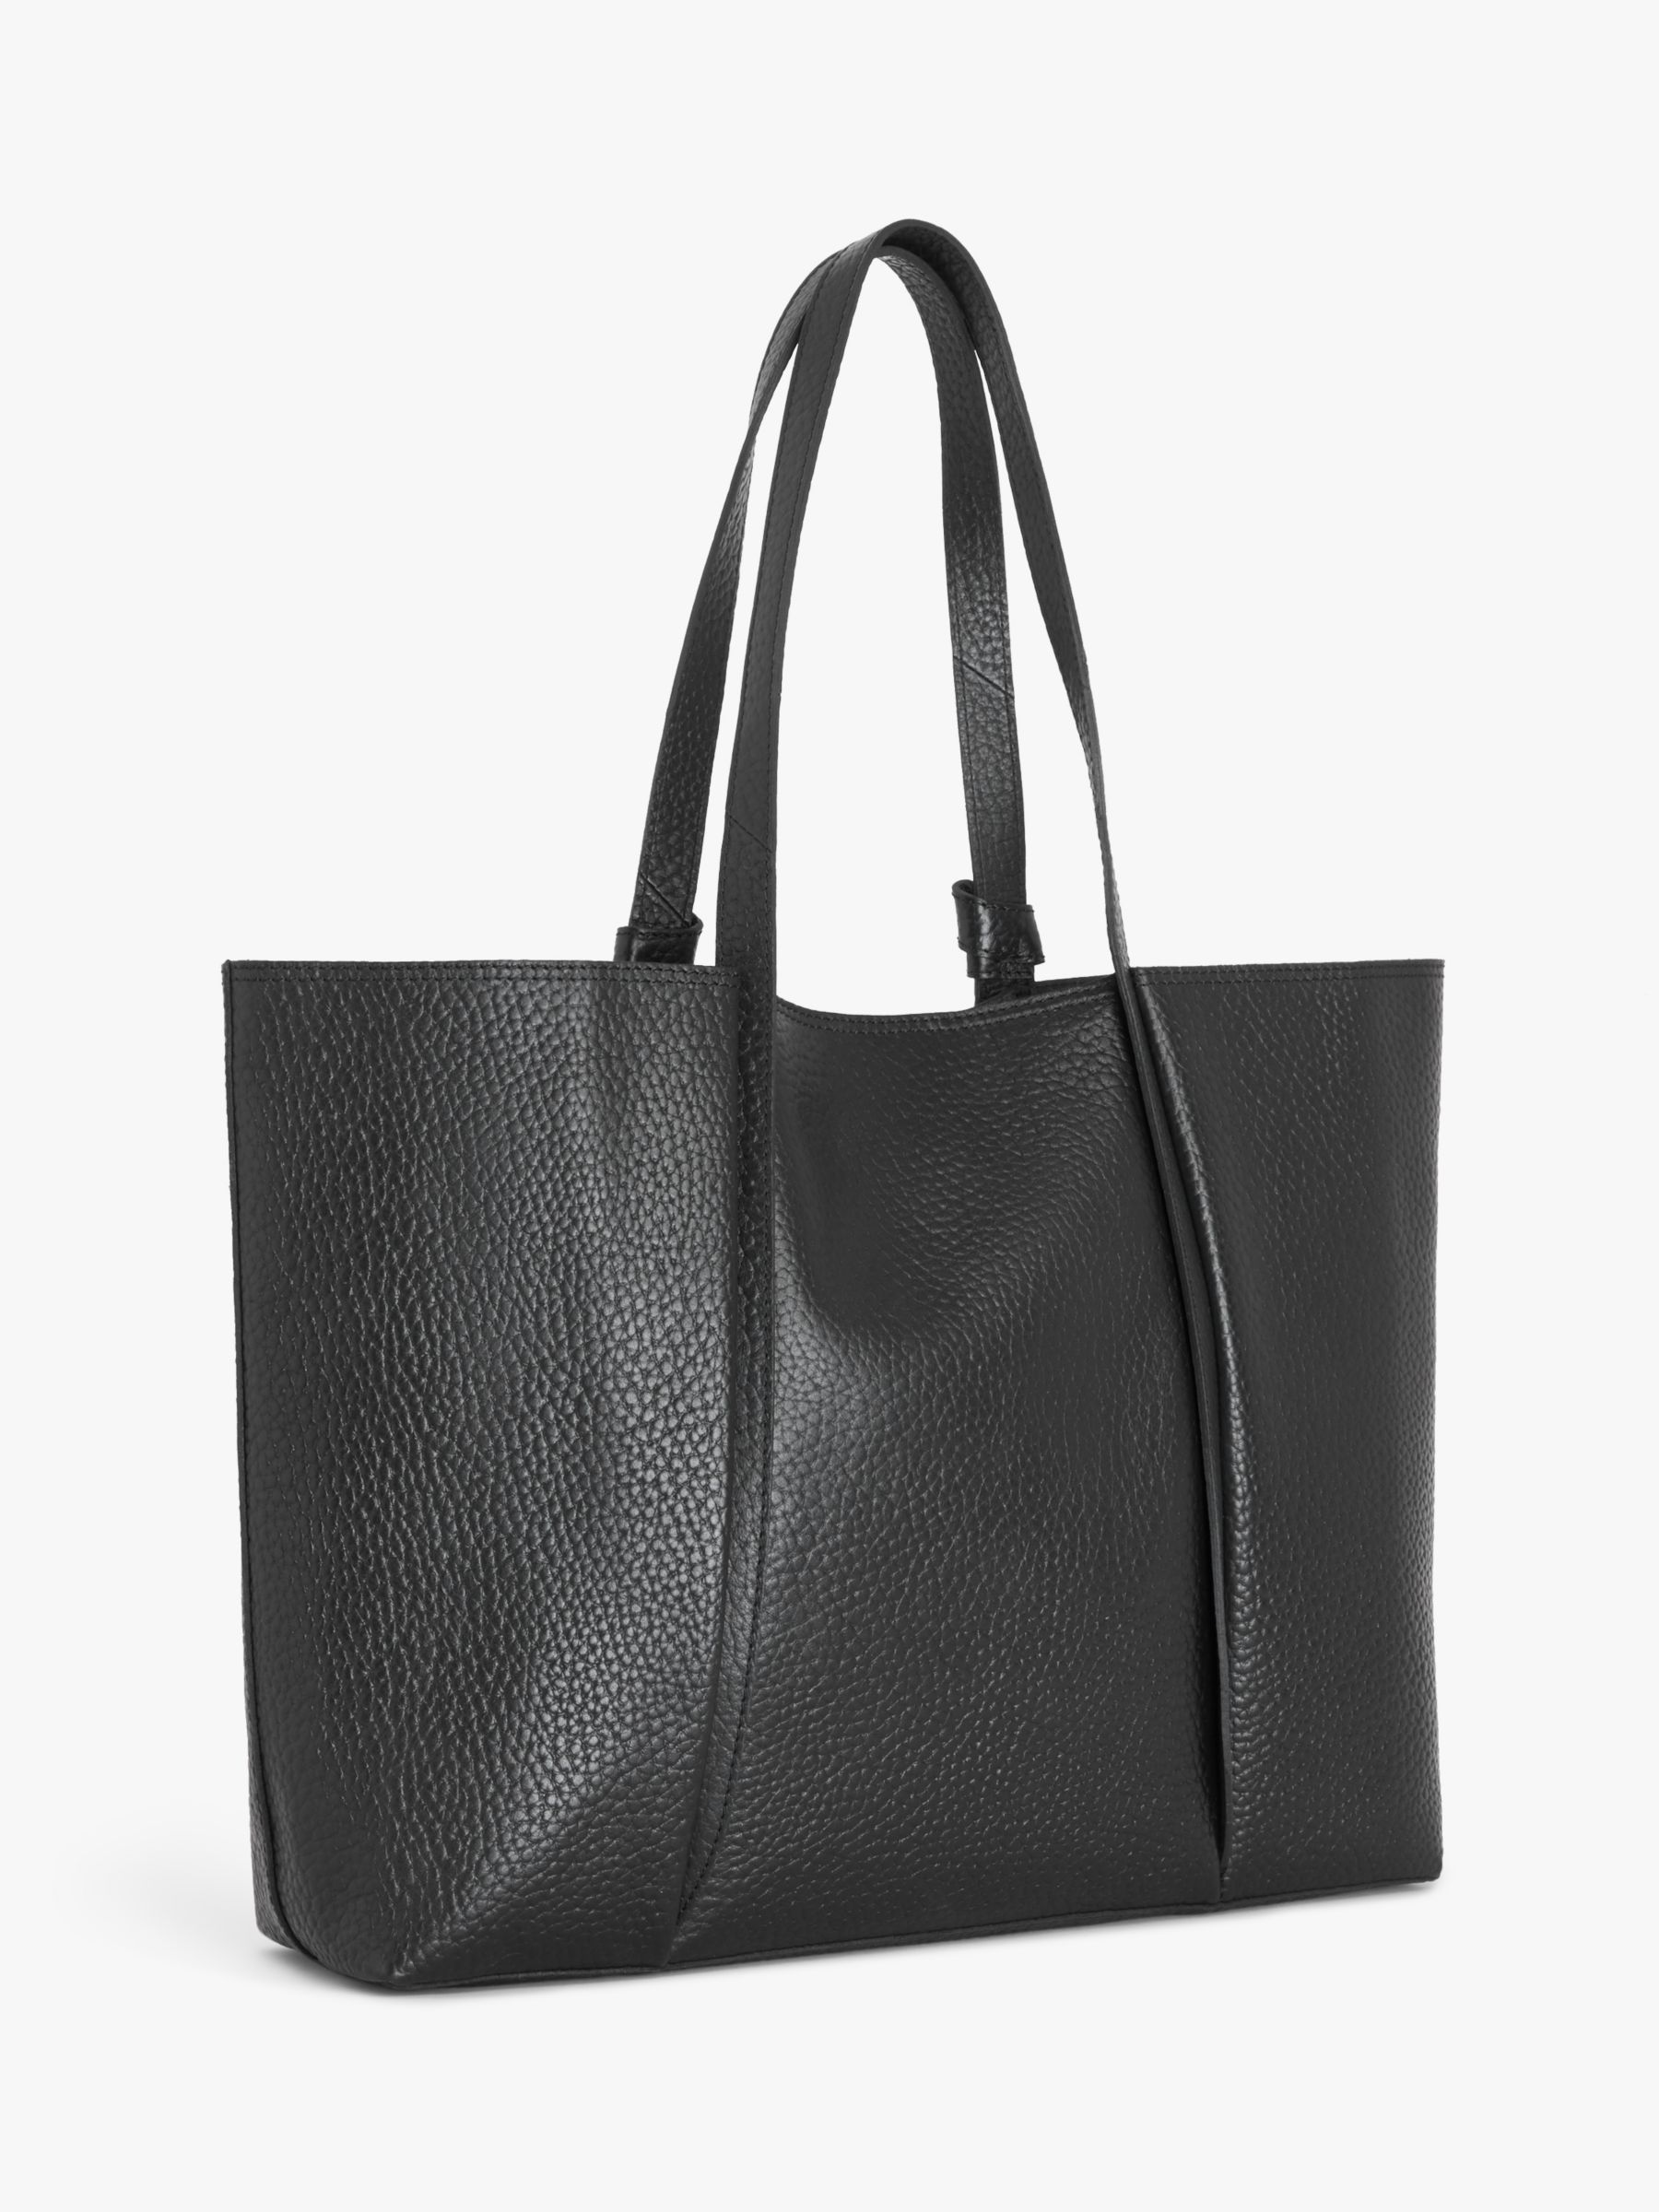 John Lewis Knot Handle Leather Tote Bag, Black at John Lewis & Partners